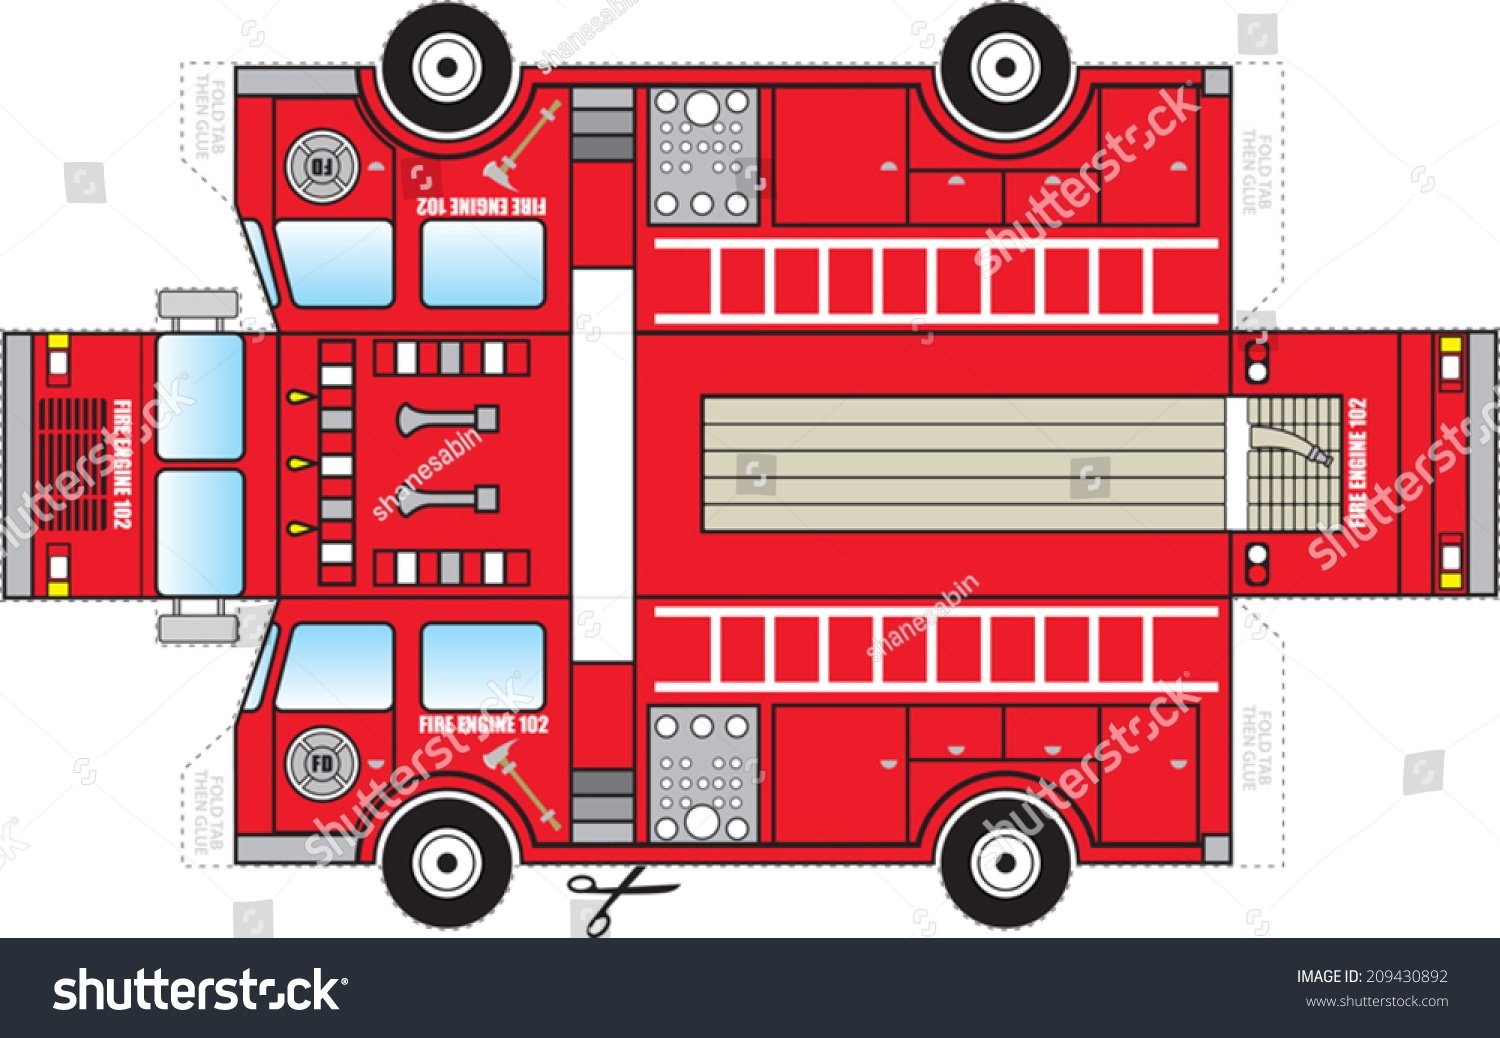 Fire Truck Cutout This Fire Truck Stock Vector Royalty Free 209430892 Shutterstock